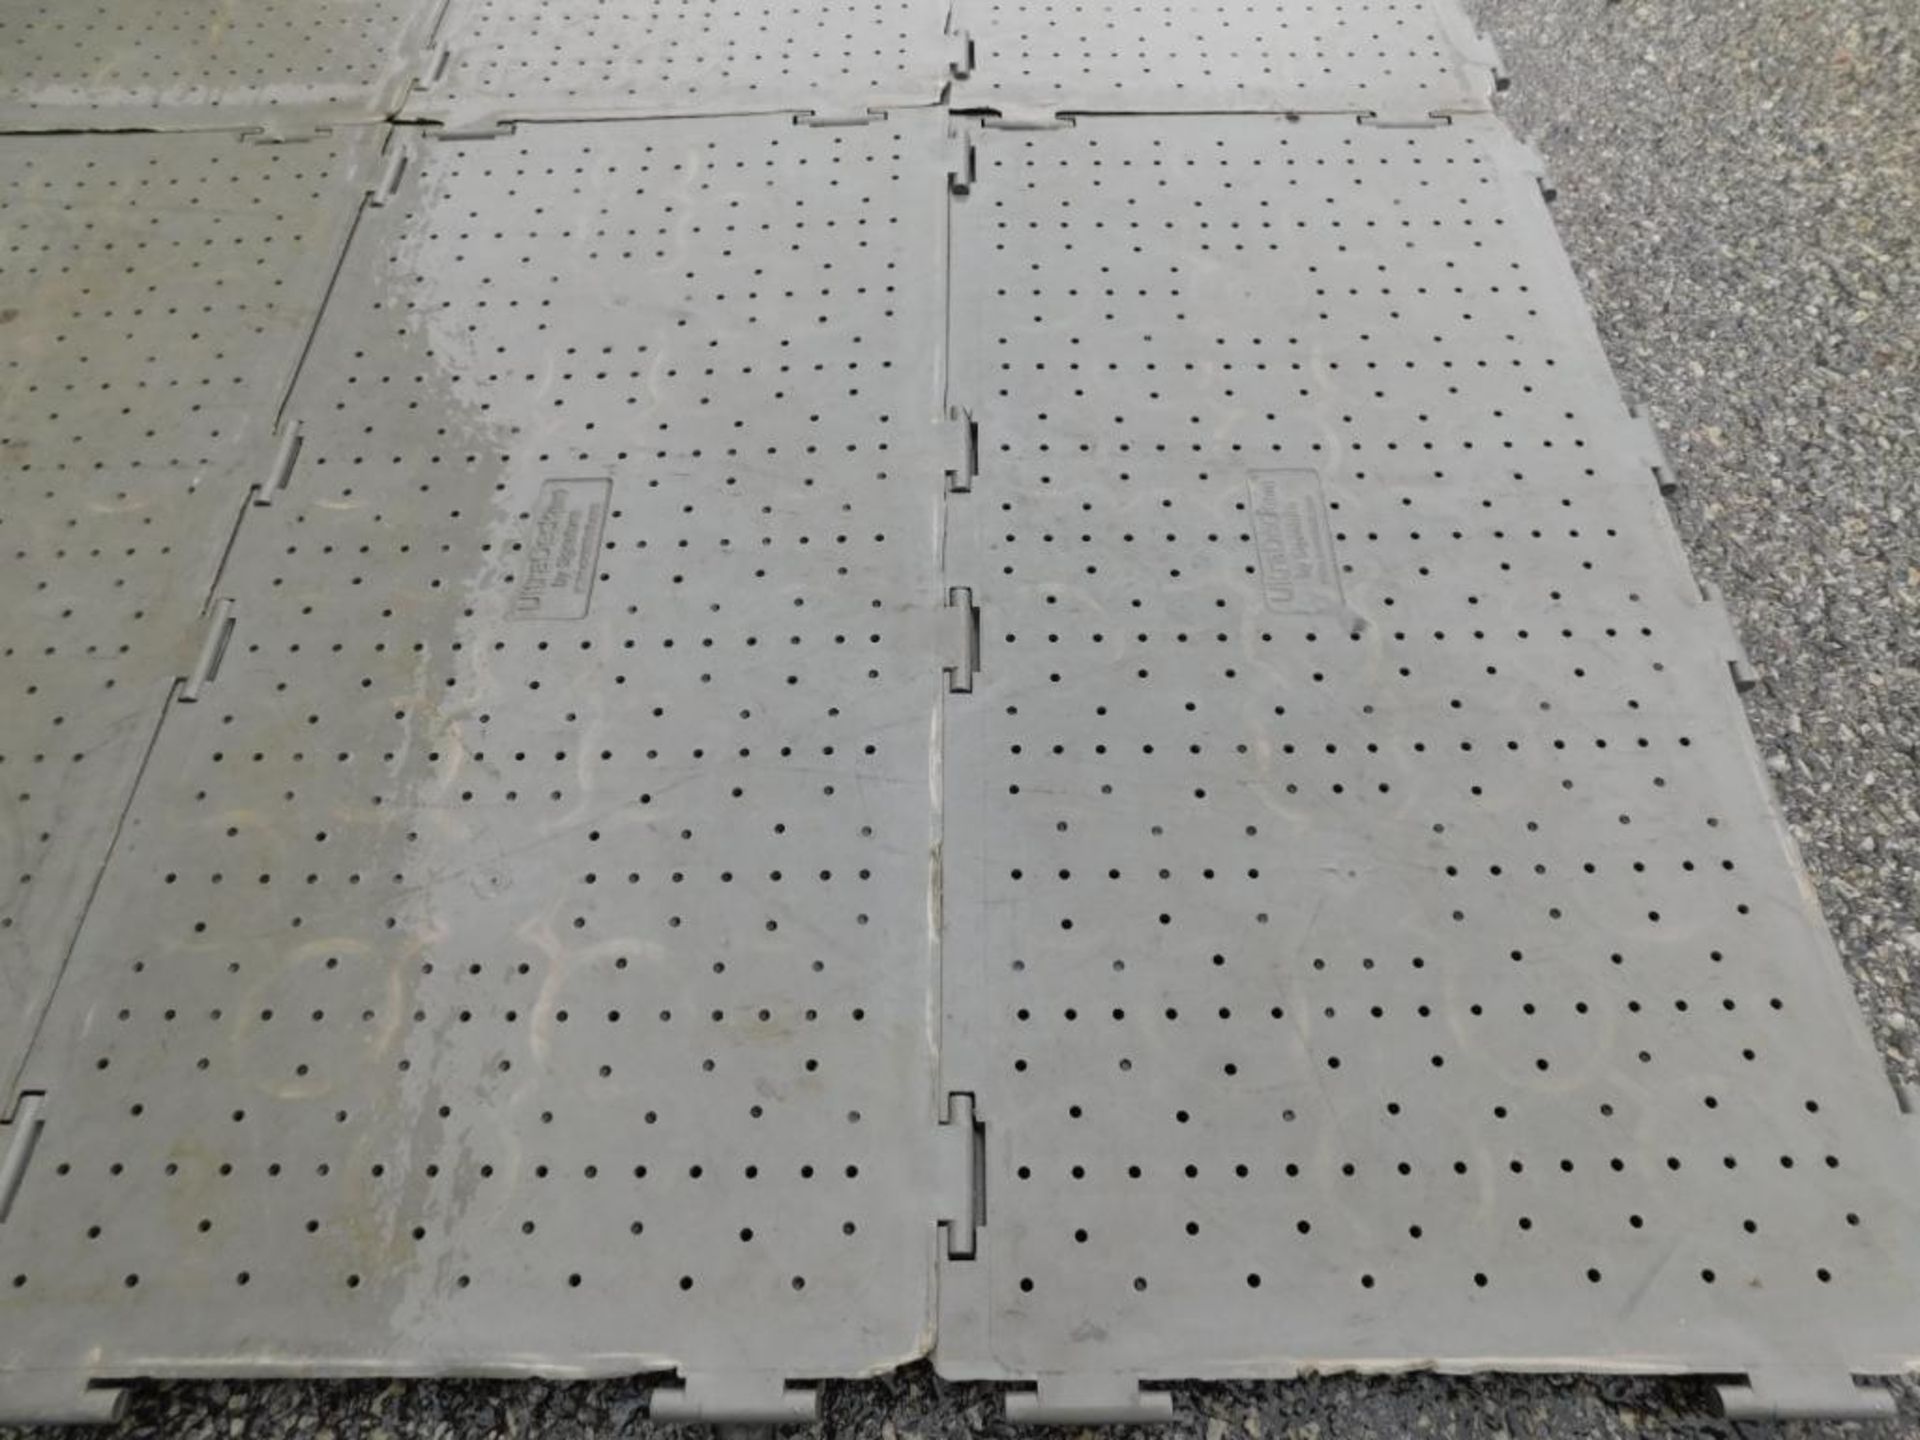 LOT: (50) 4' x 4' Event Deck Portable Flooring w/Drain Holes, Dark Gray, B Grade (LOCATION: 5115 - Image 3 of 3